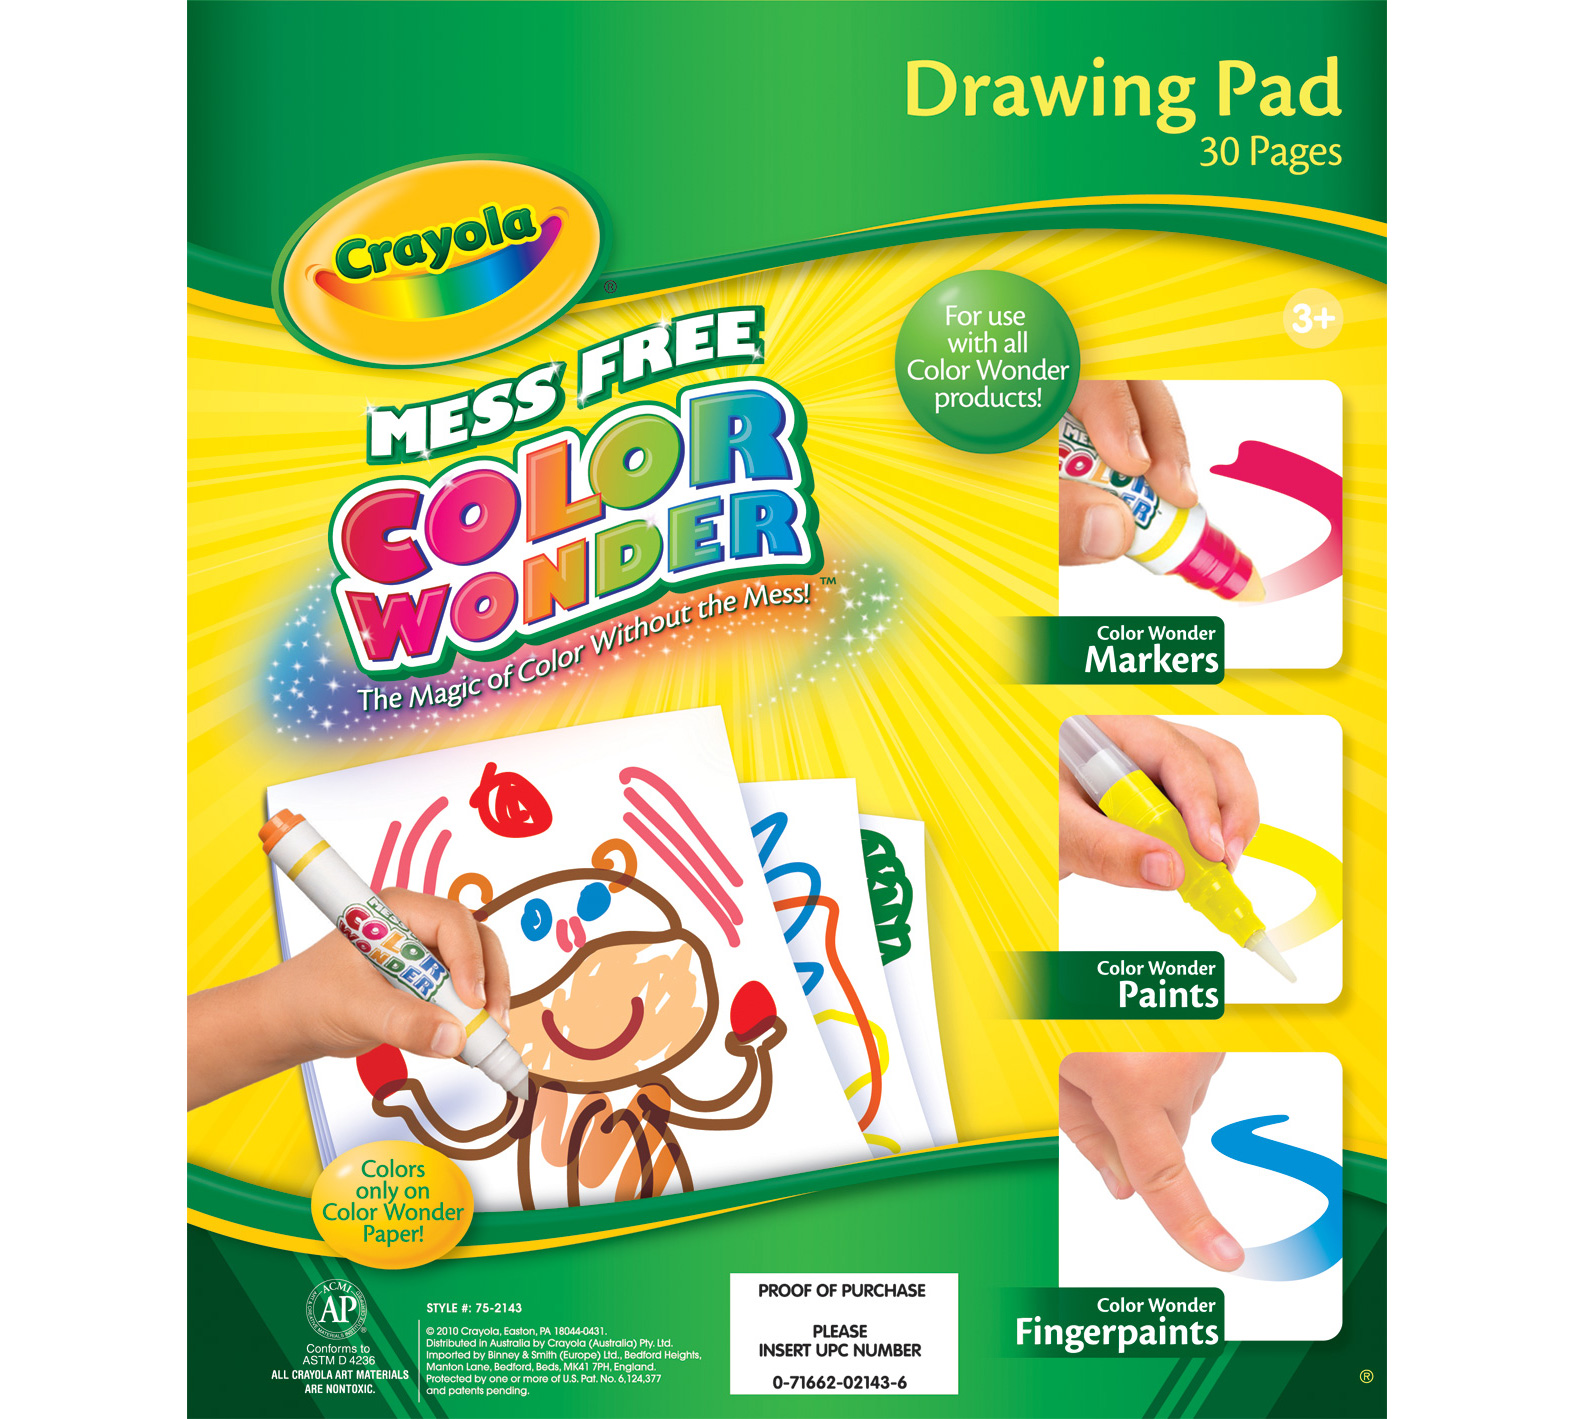 color-wonder-refill-drawing-pad-crayola